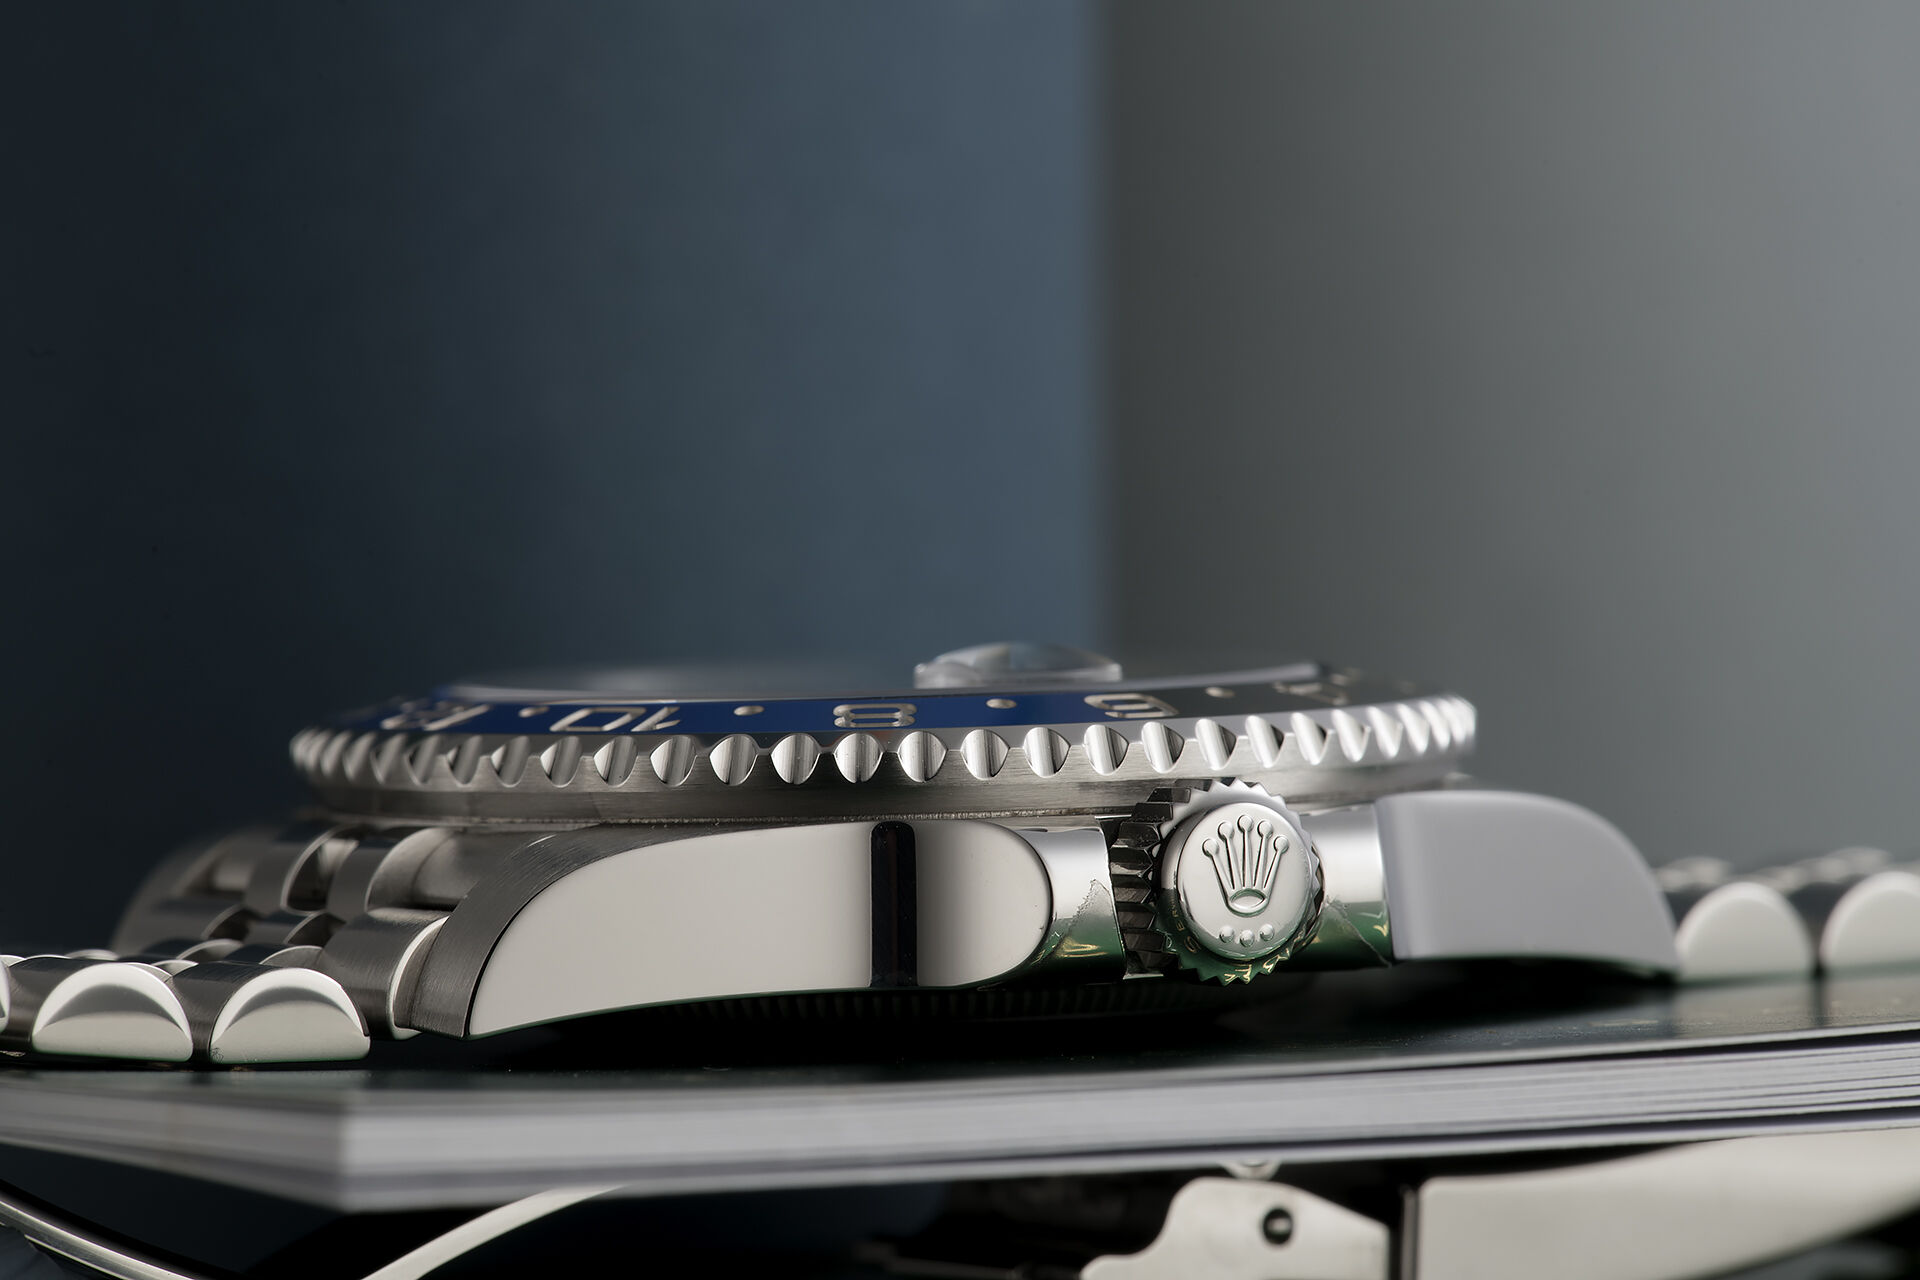 ref 126710BLNR | 5 Year Rolex Warranty | Rolex GMT-Master II